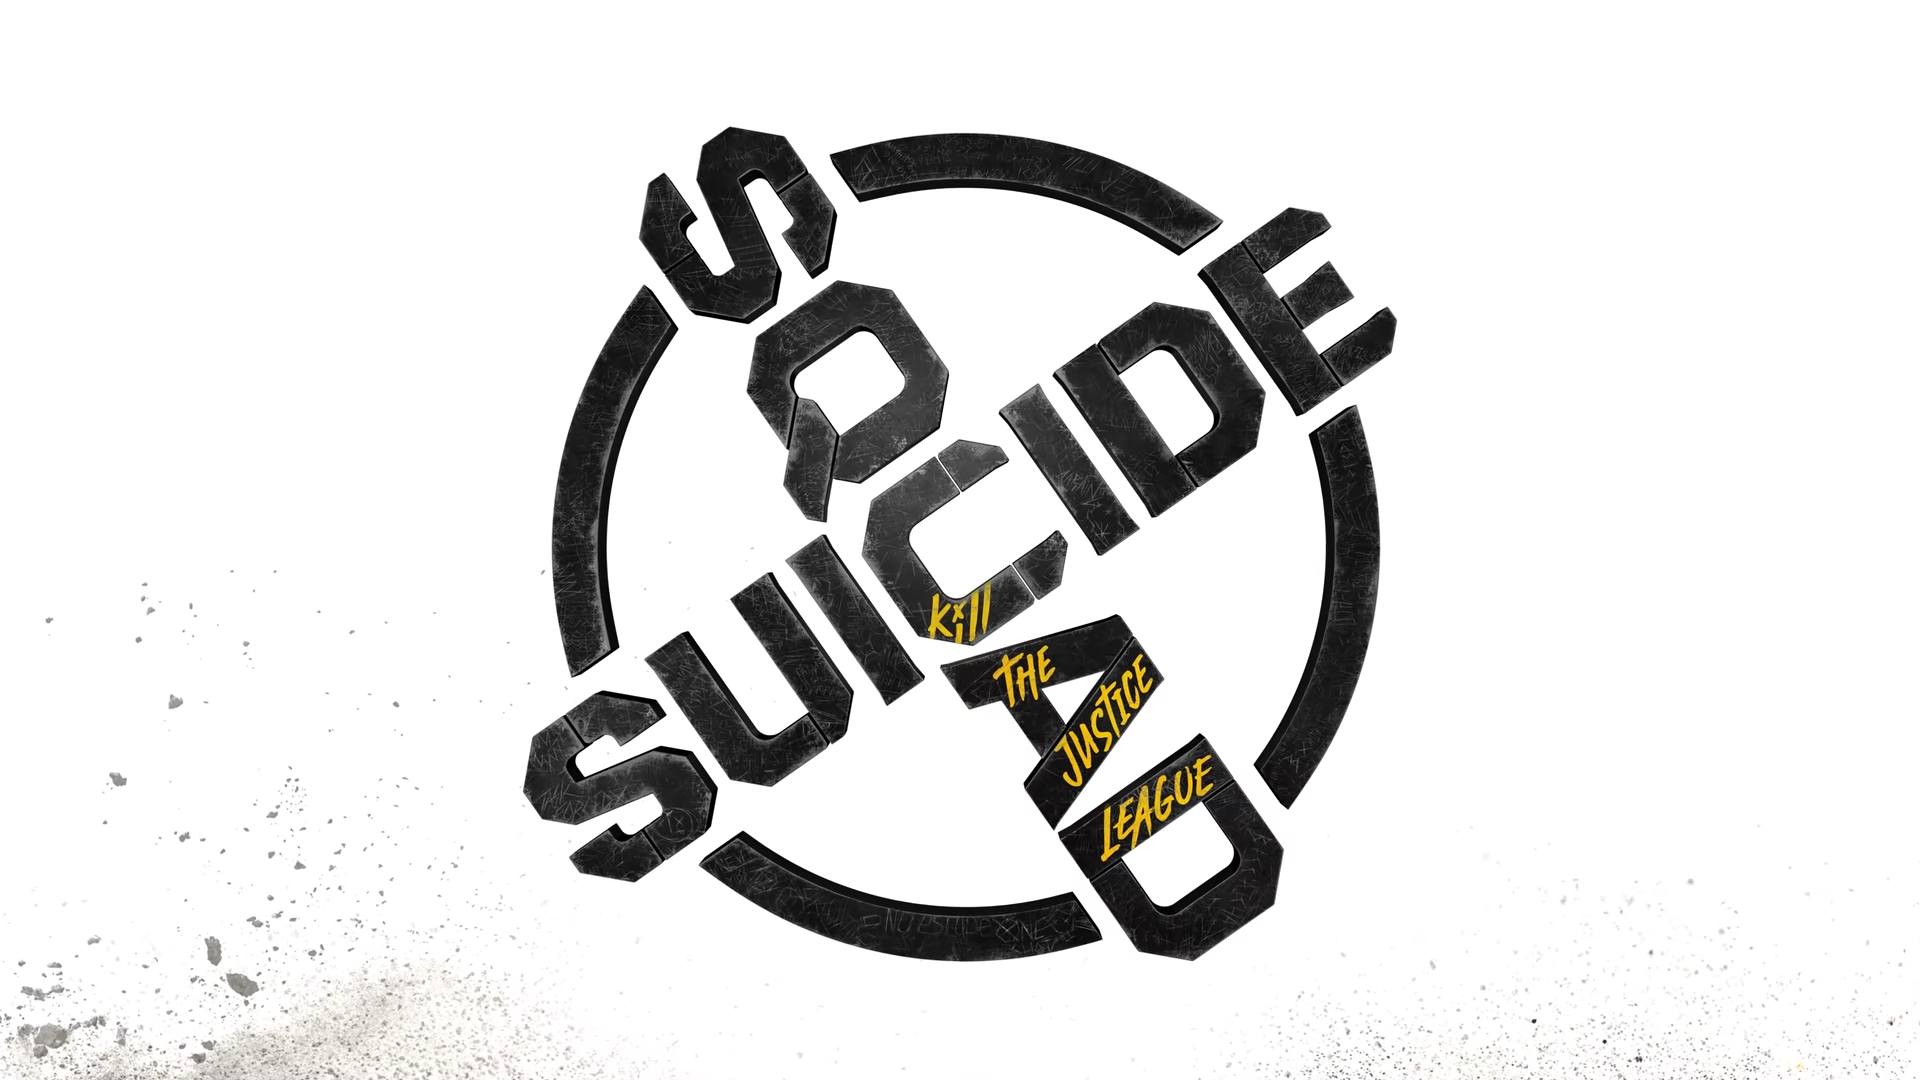 suicide squad: Suicide Squad: Kill the Justice League: Know